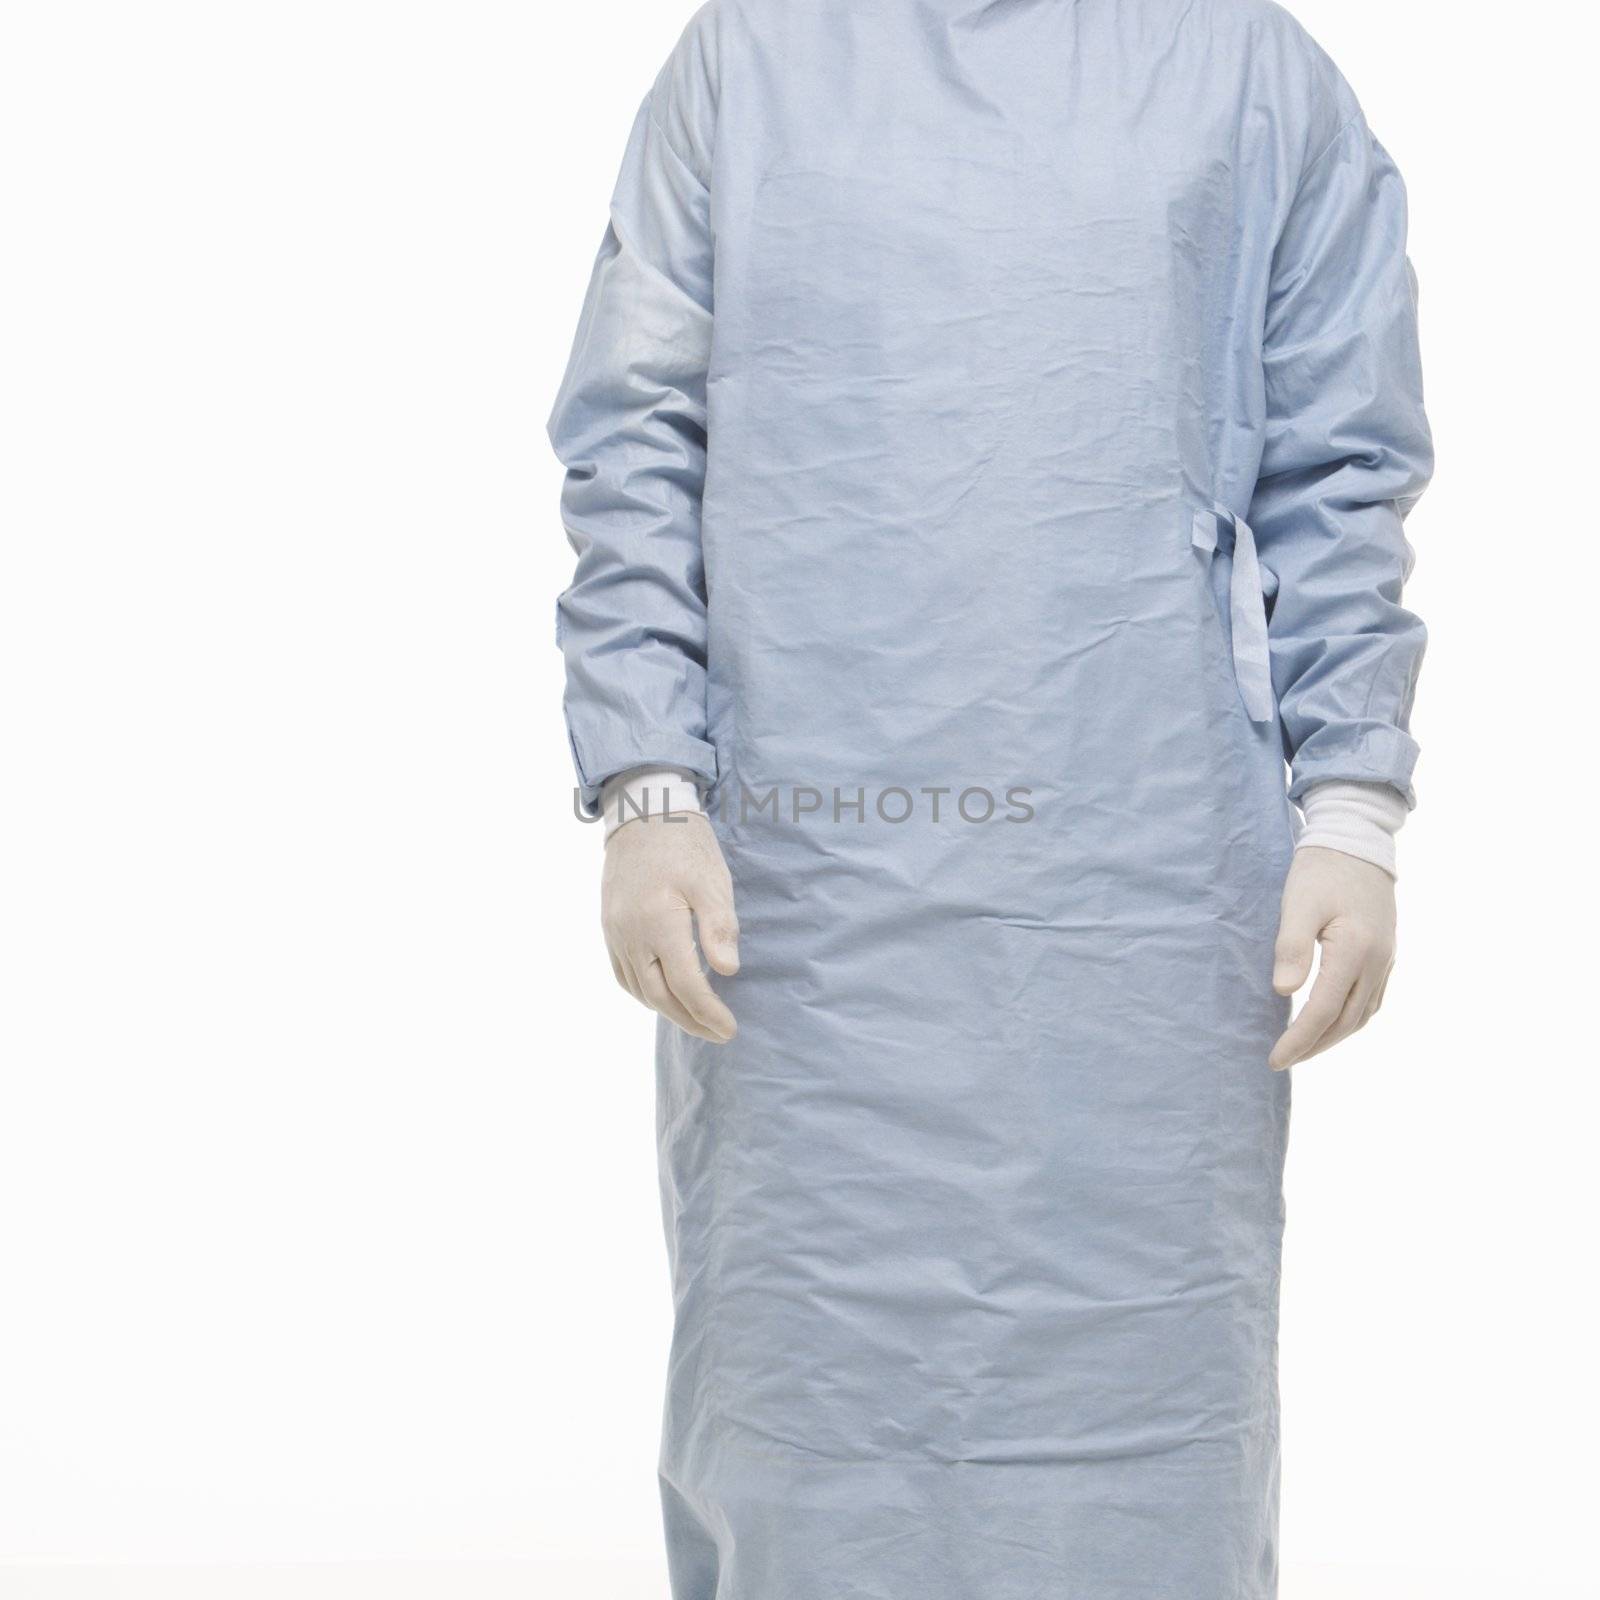 Surgeon in uniform. by iofoto